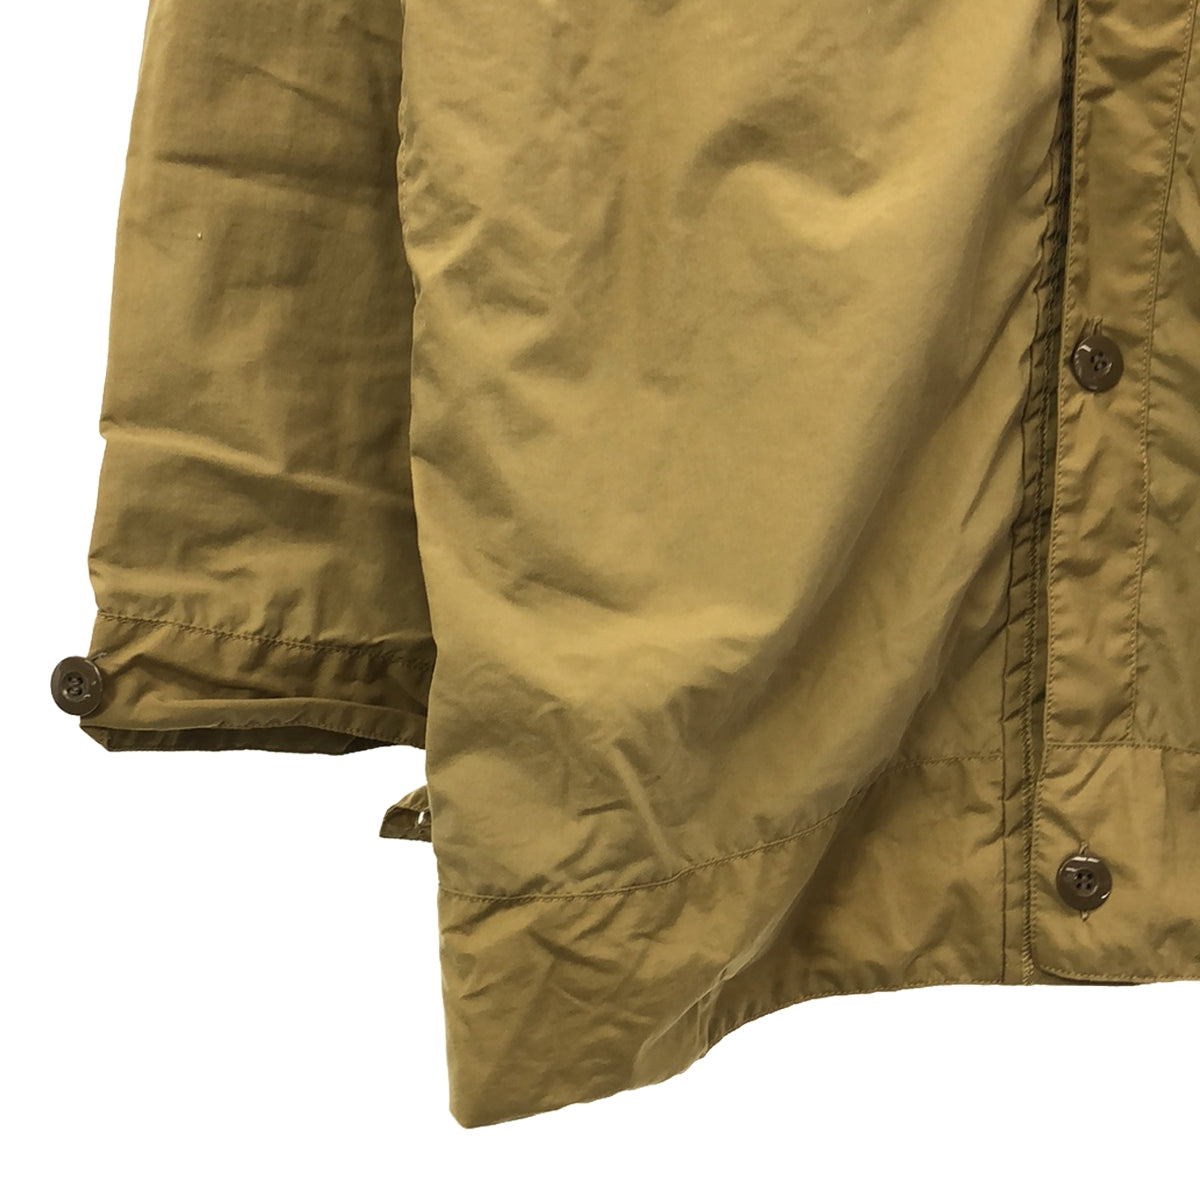 NOWOS / ノーウォス | nylon jacket ジャケット |